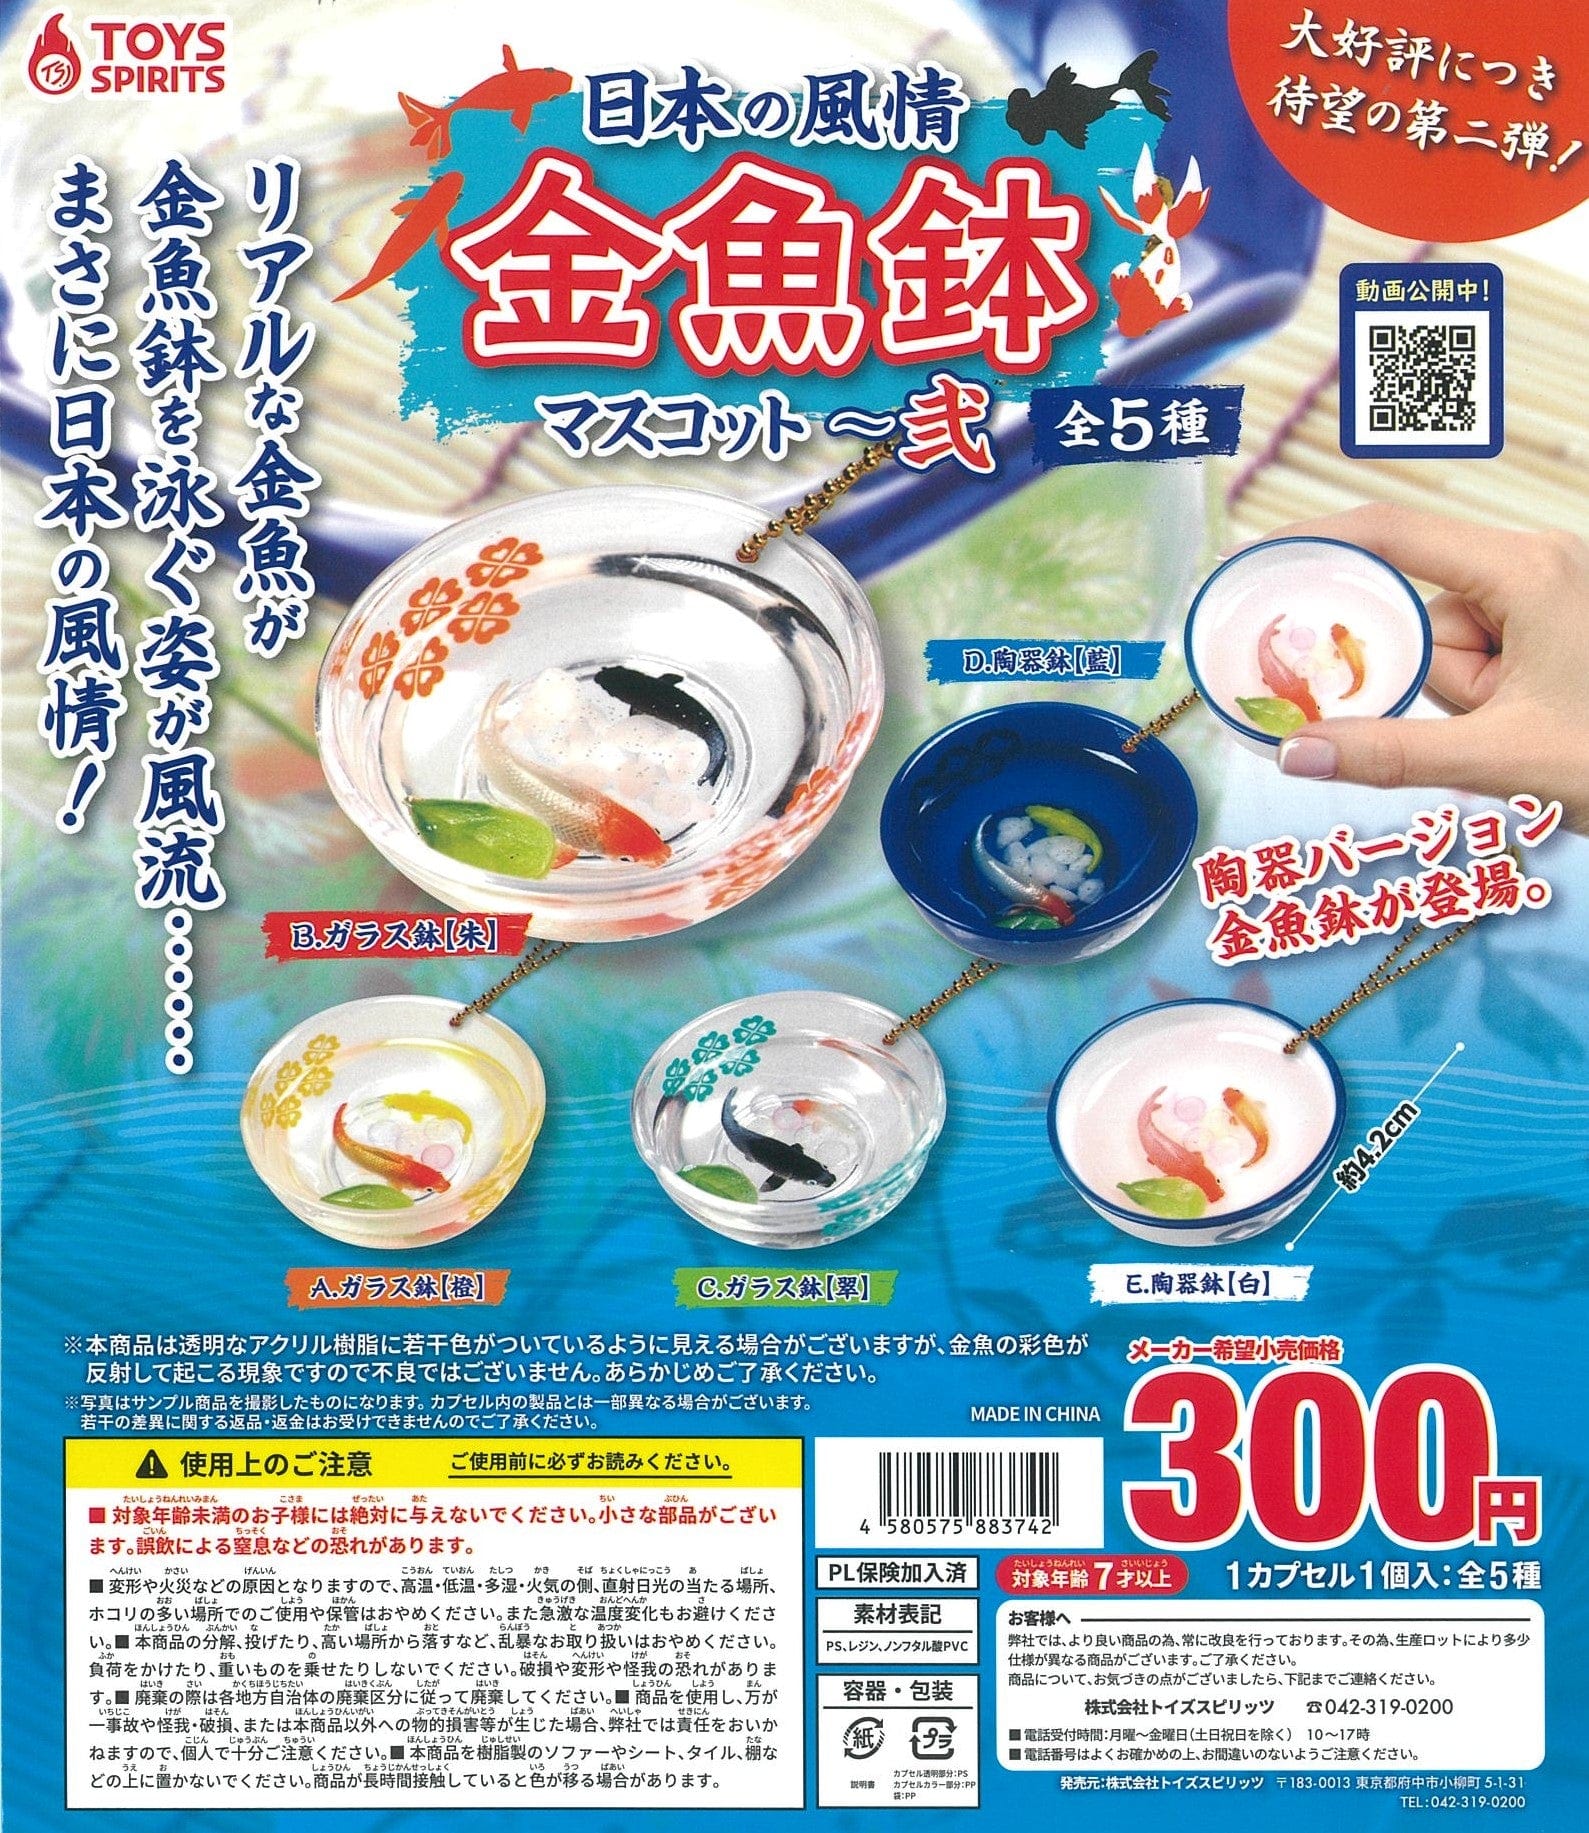 TOYS SPIRITS CP1844 Japanese Atmosphere! Goldfish Bowl Mascot - 2